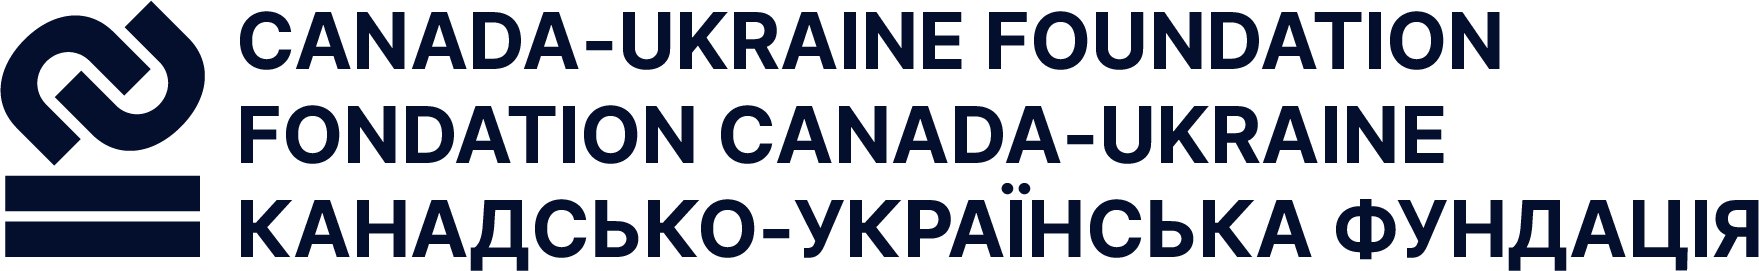 Canada Ukraine Foundation